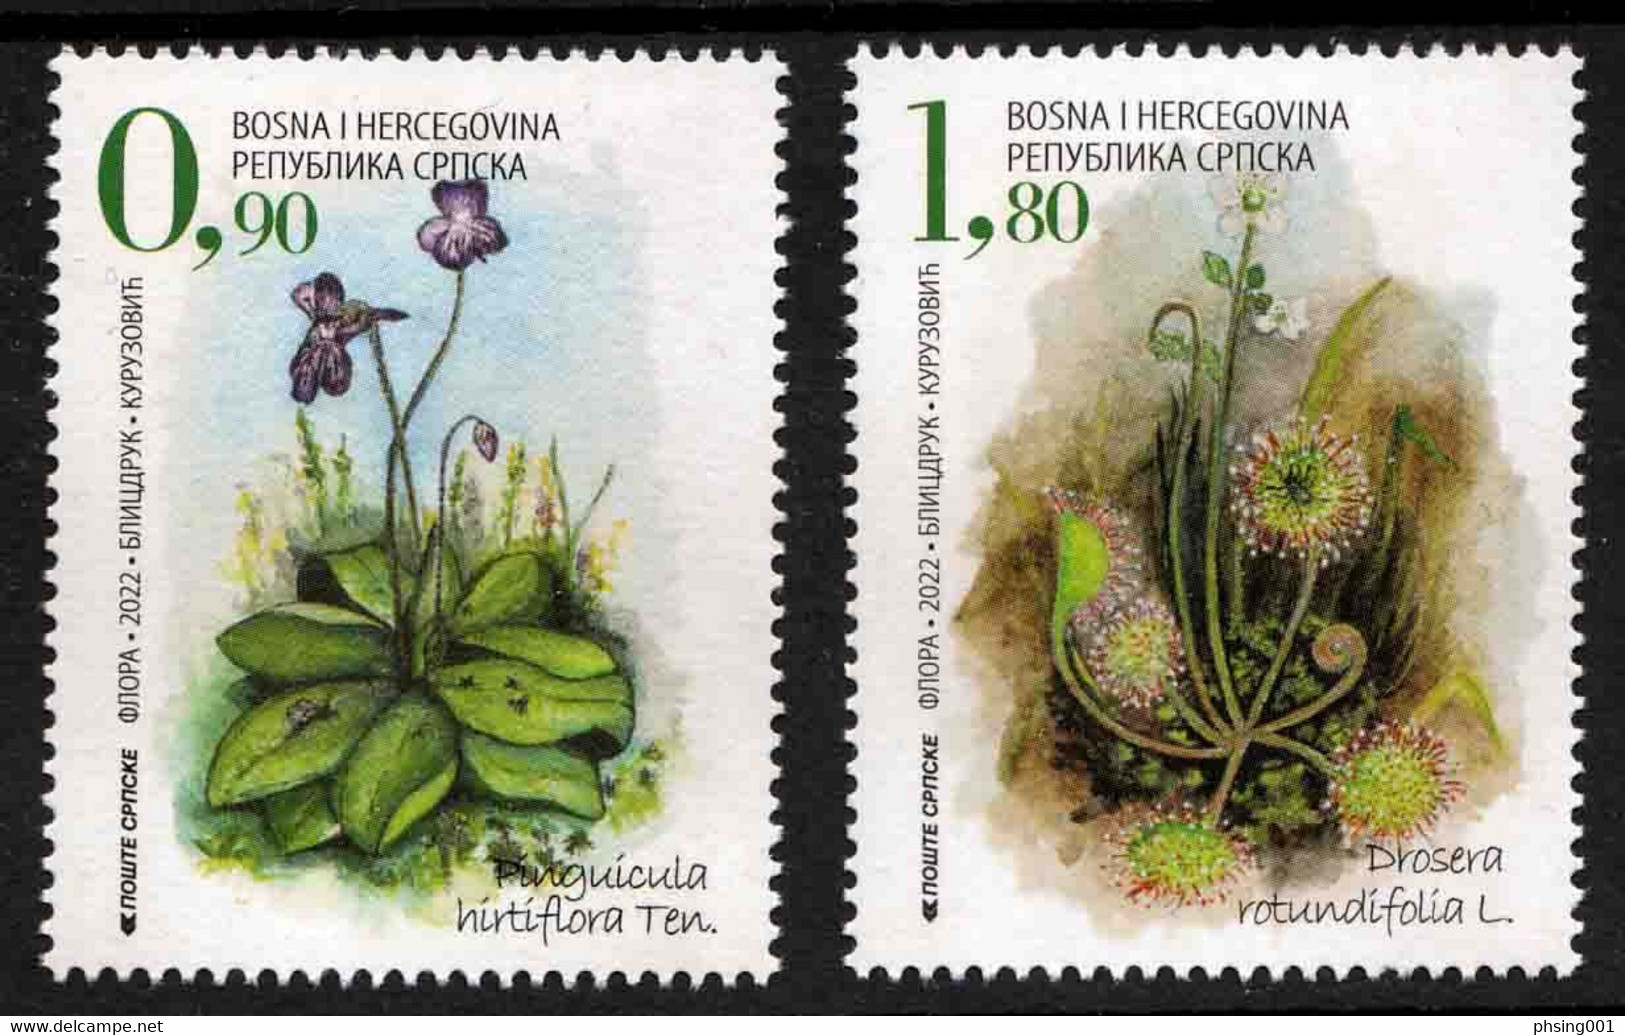 Bosnia Serbia 2022 Flora Flowers Carnivorous Plants Masnica Pinguicula Hirtiflora Ten. Drosera Rotundifolia L. Set MNH - Bosnien-Herzegowina